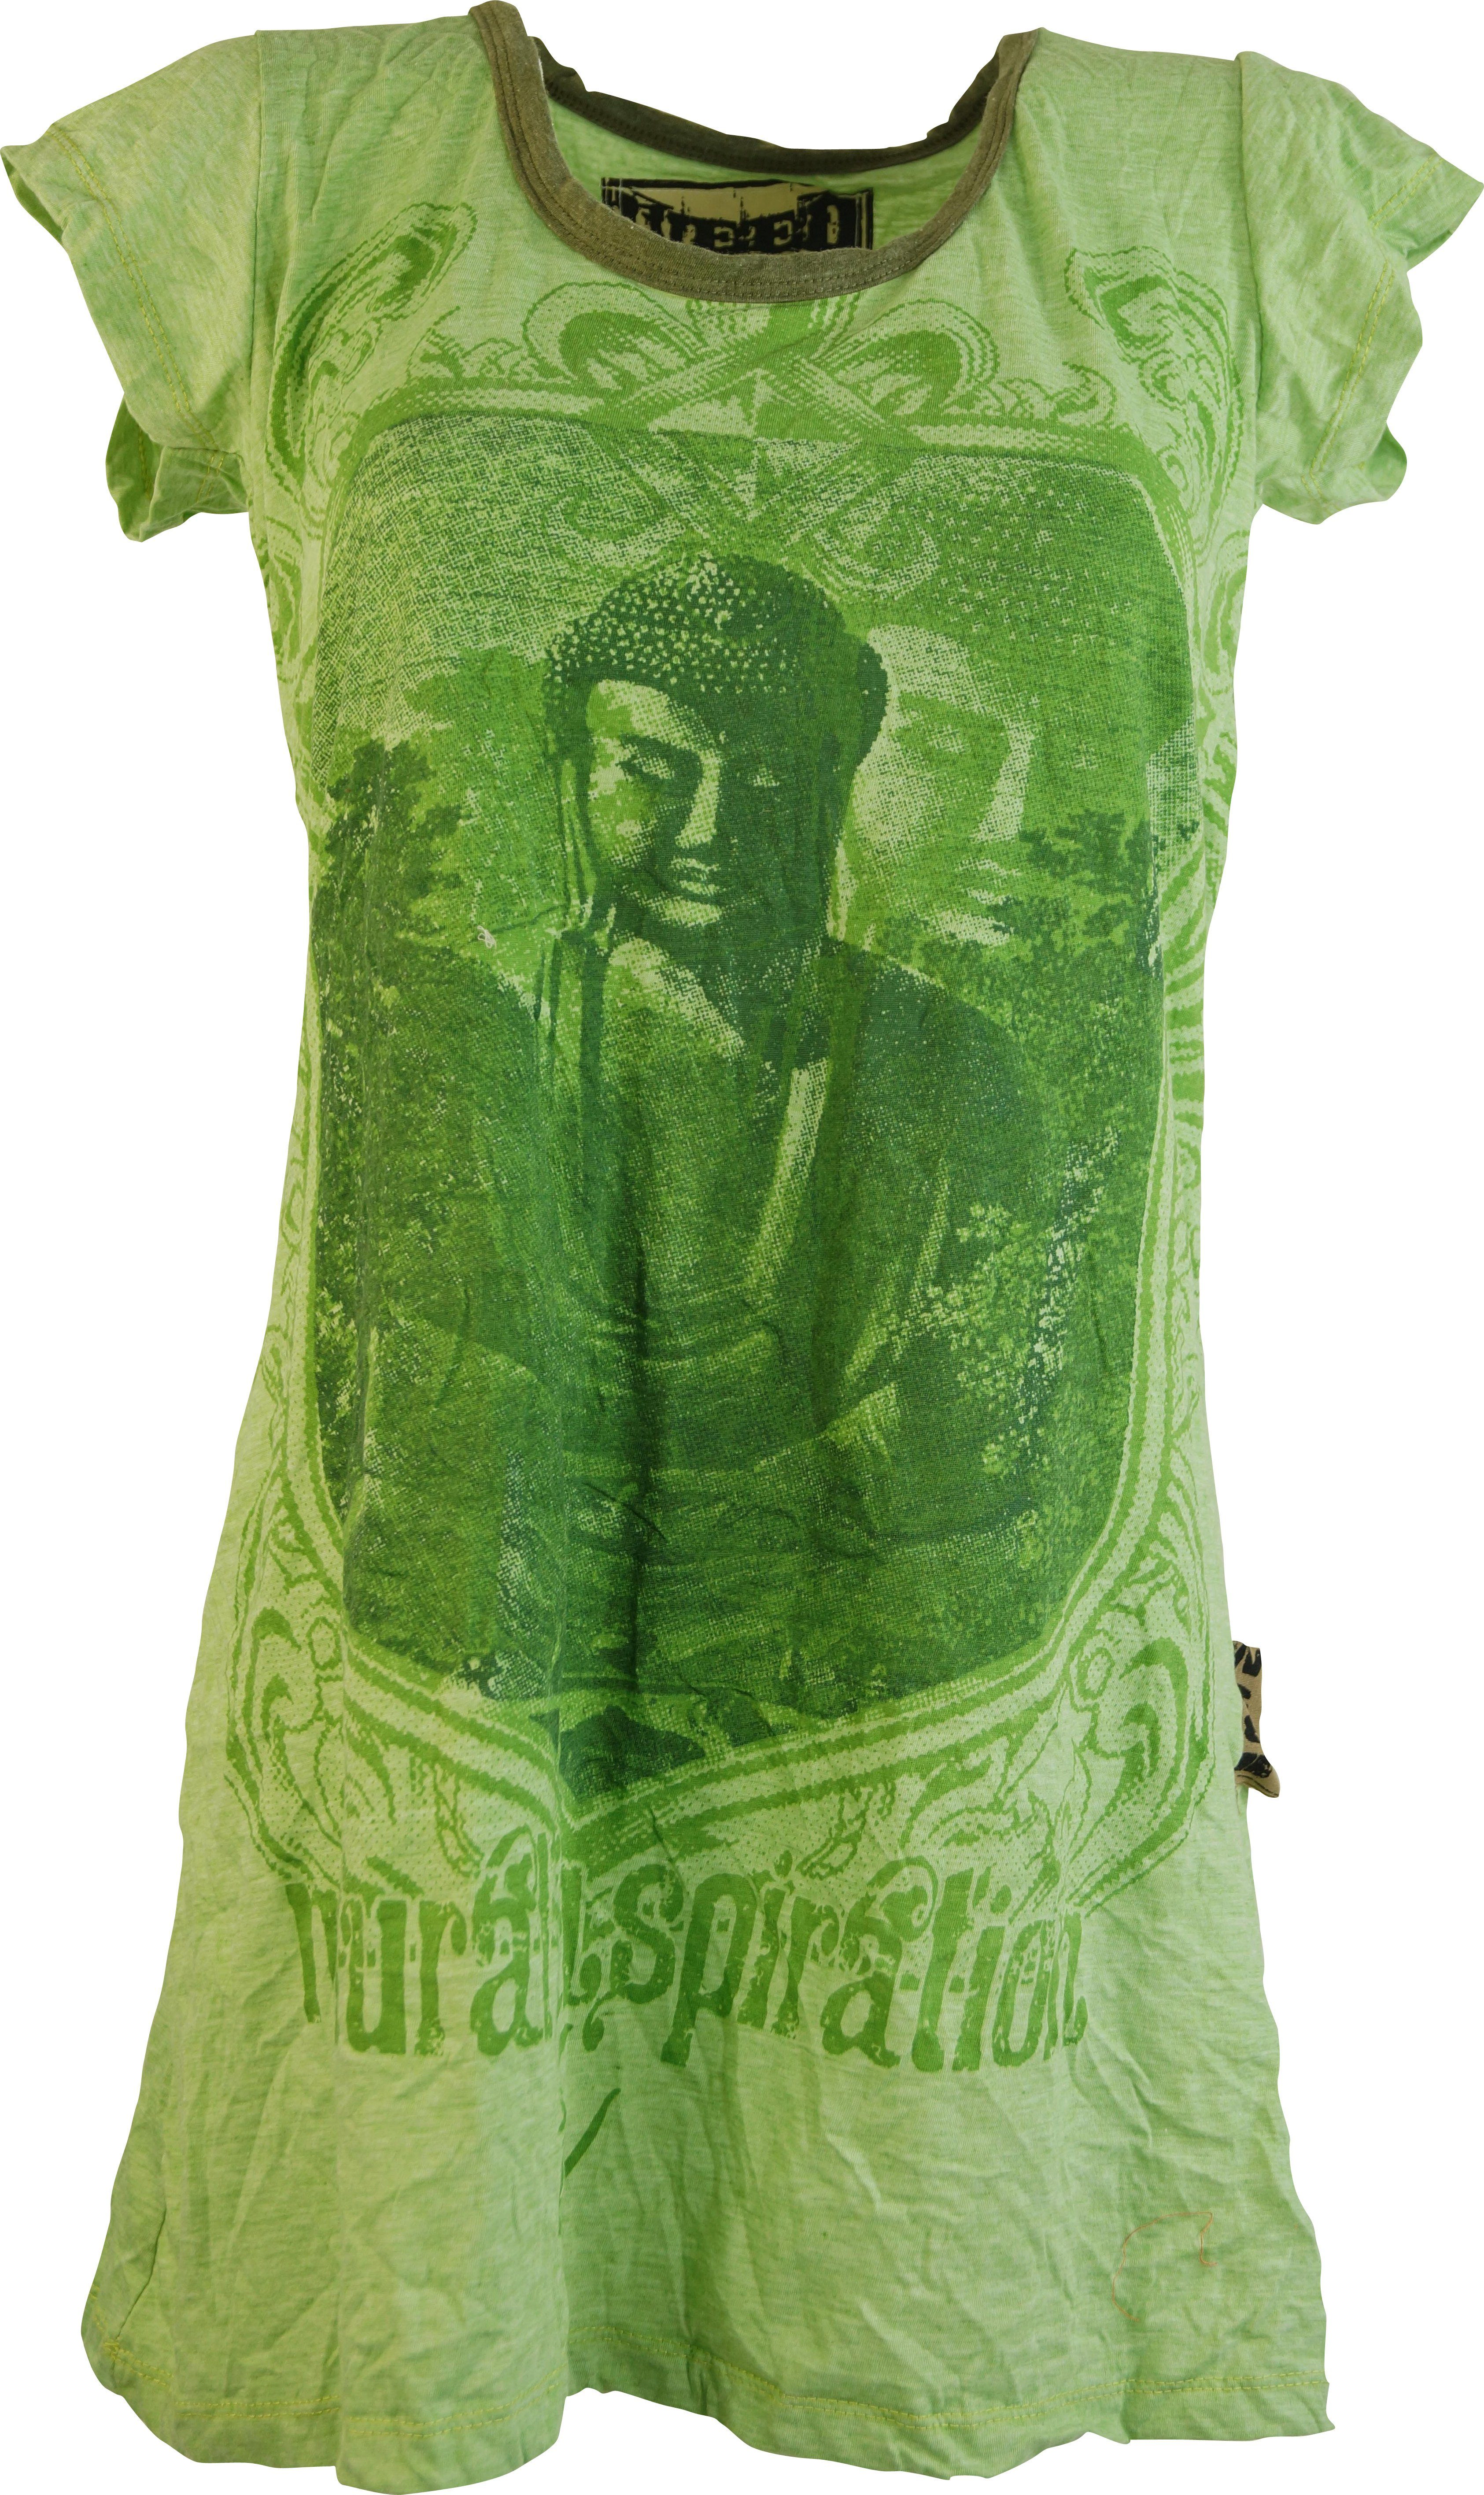 Guru-Shop T-Shirt Weed Longshirt, Minikleid - Buddha grün Festival, Goa Style, alternative Bekleidung